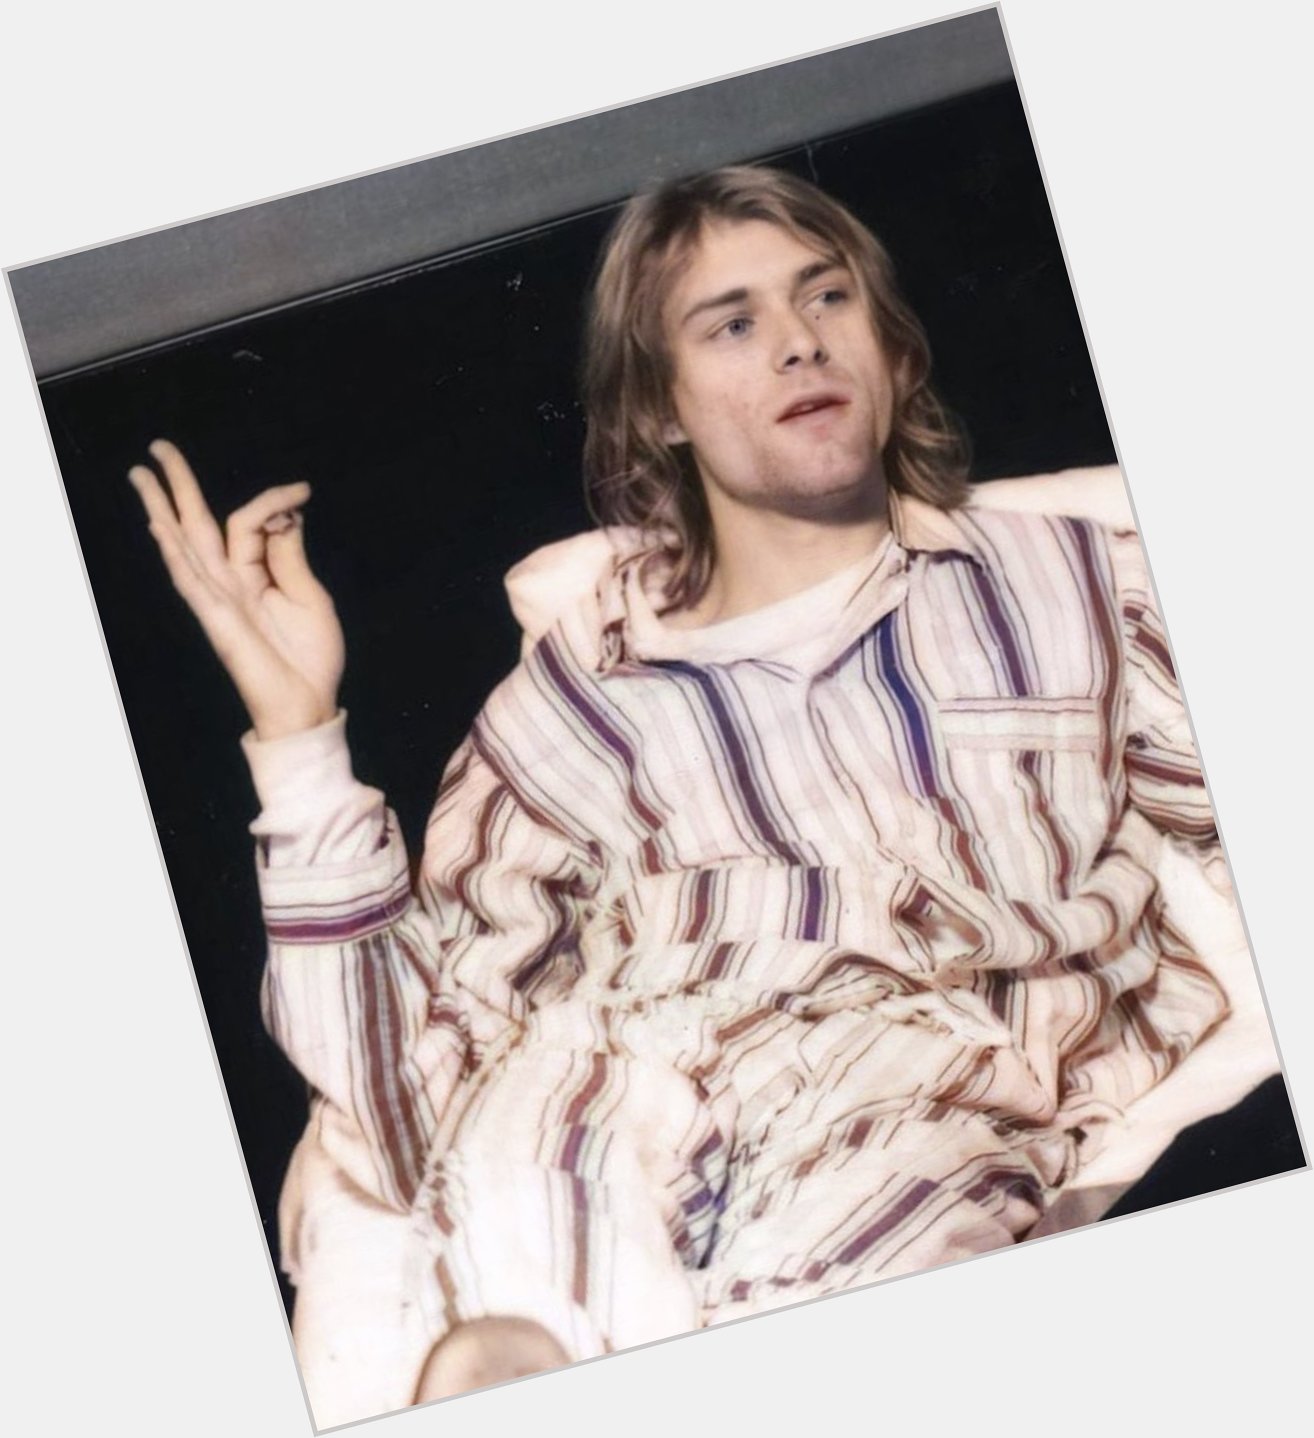 Happy bday Kurt Cobain a real angel  